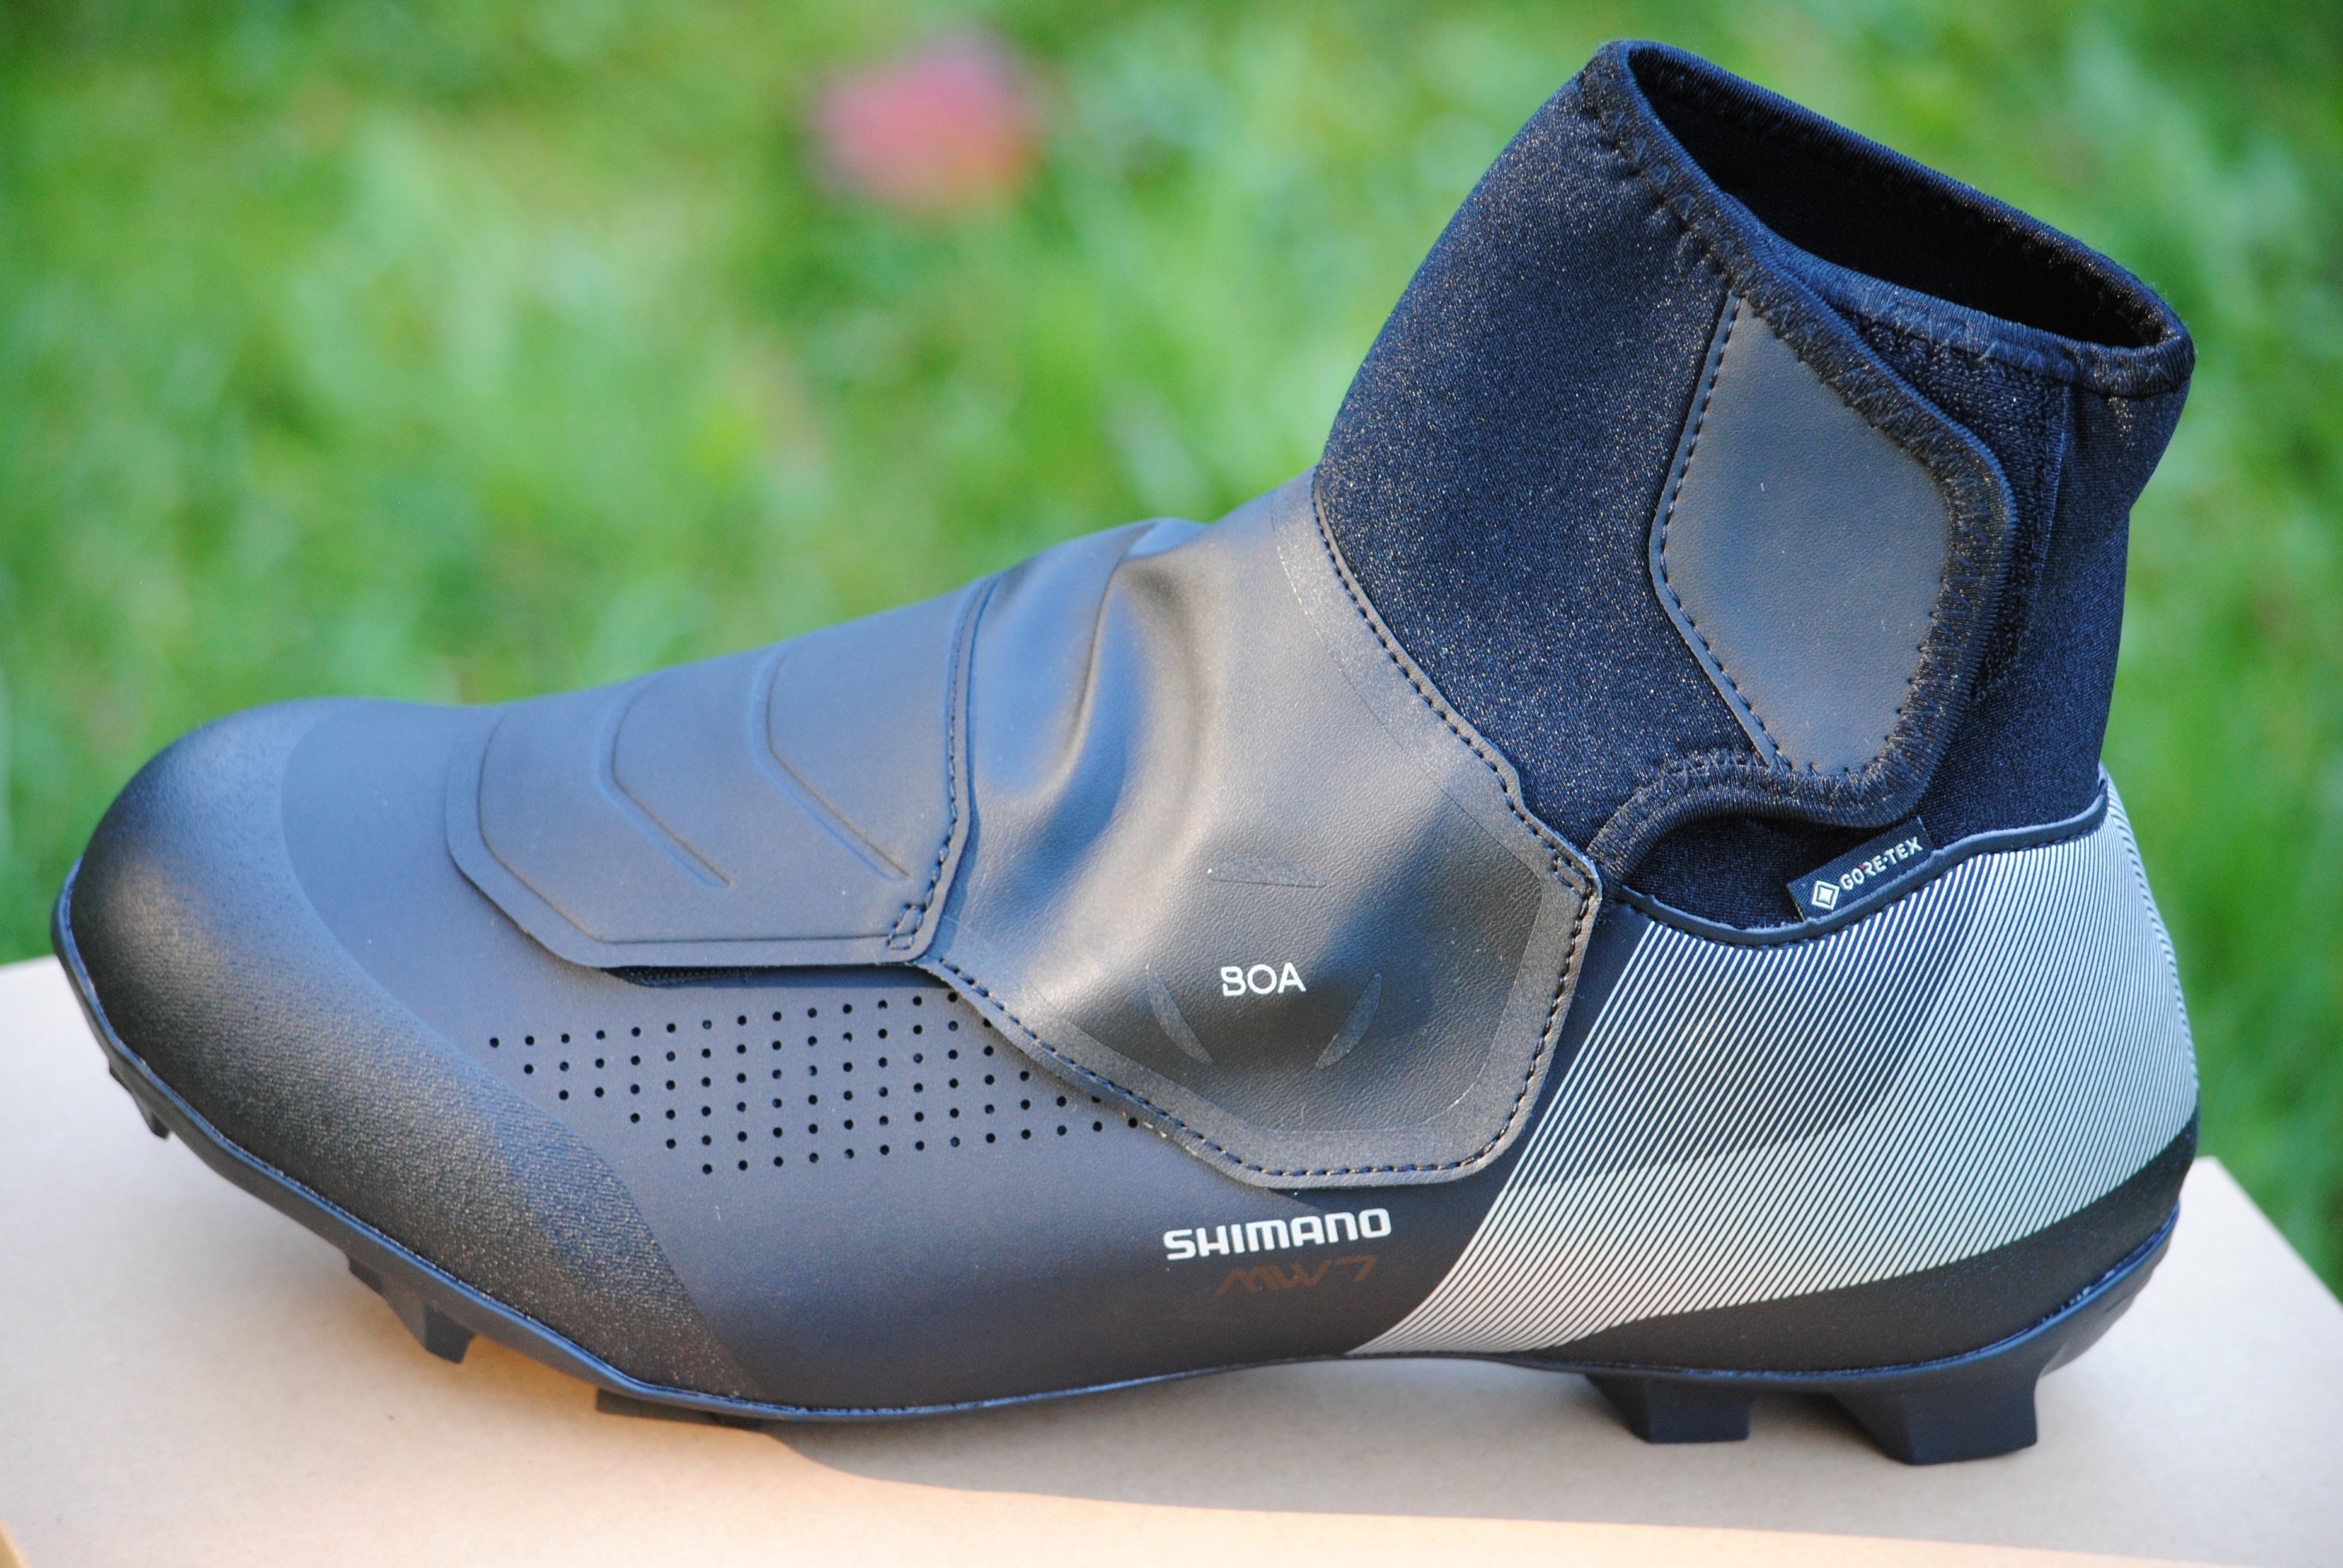 Shimano MW702 Winter Shoes